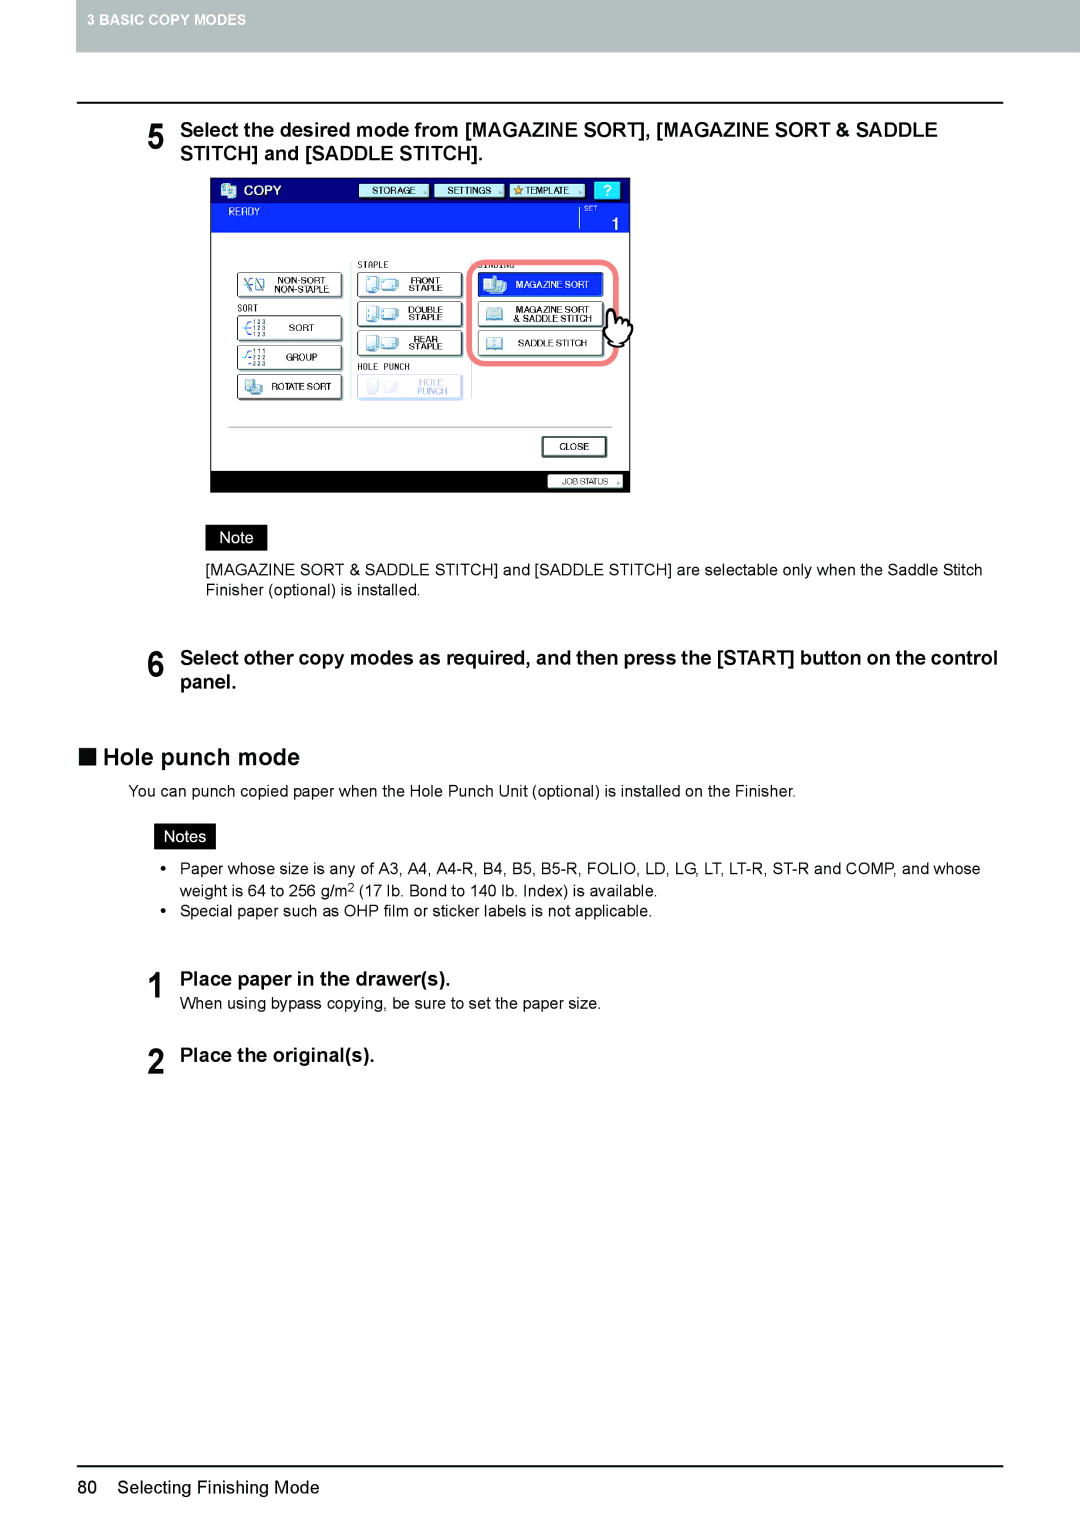 Toshiba 6520c, e-STUDIO5520C manual „ Hole punch mode 